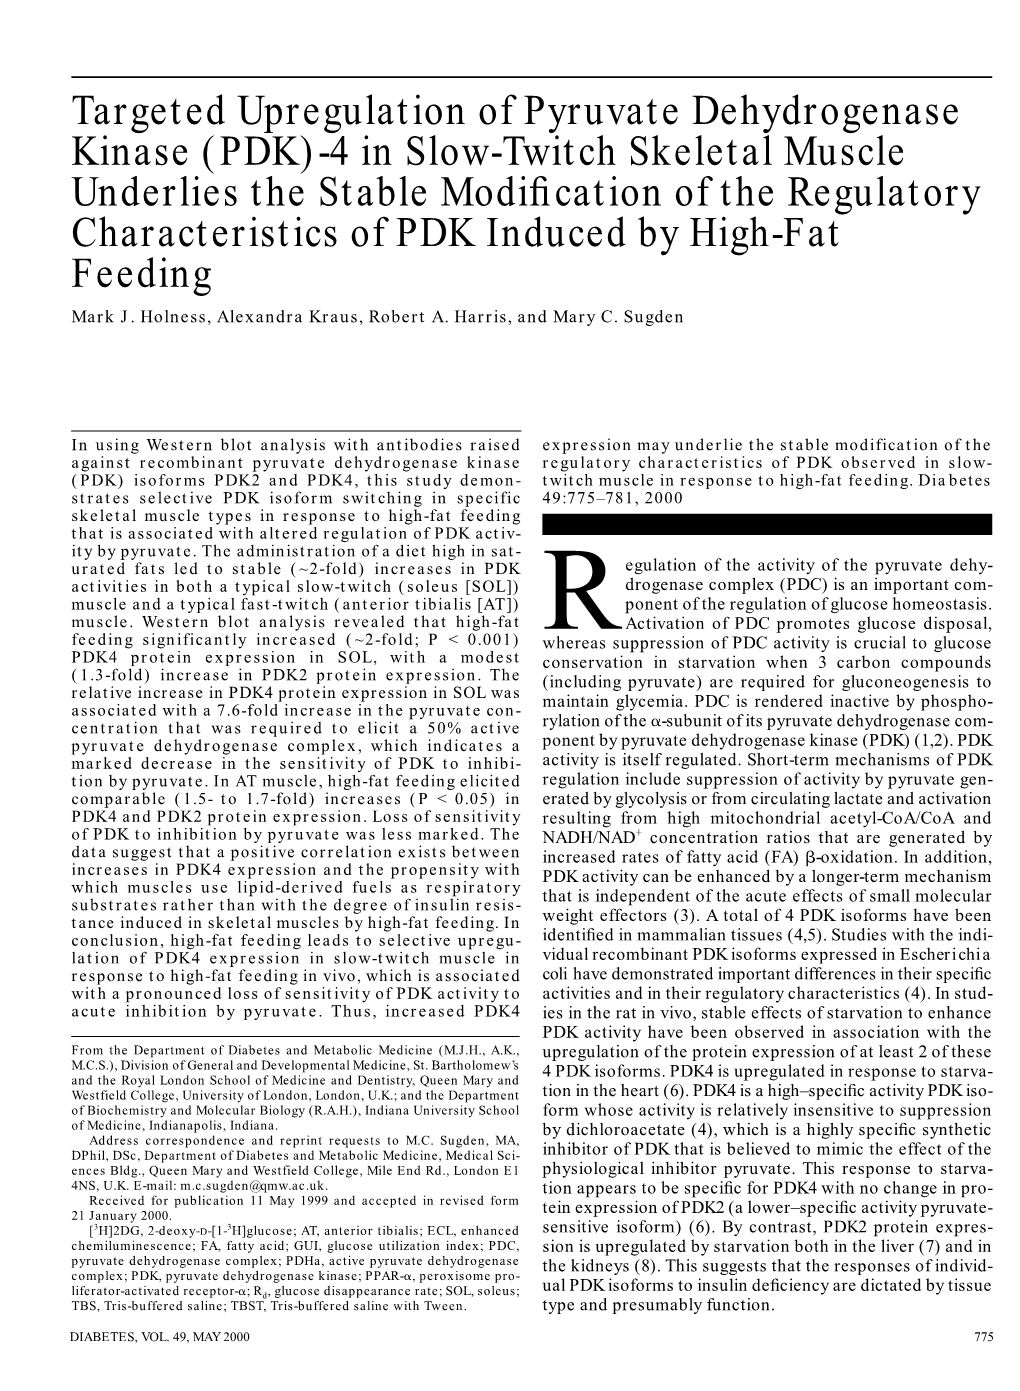 Targeted Upregulation of Pyruvate Dehydrogenase Kinase (PDK)